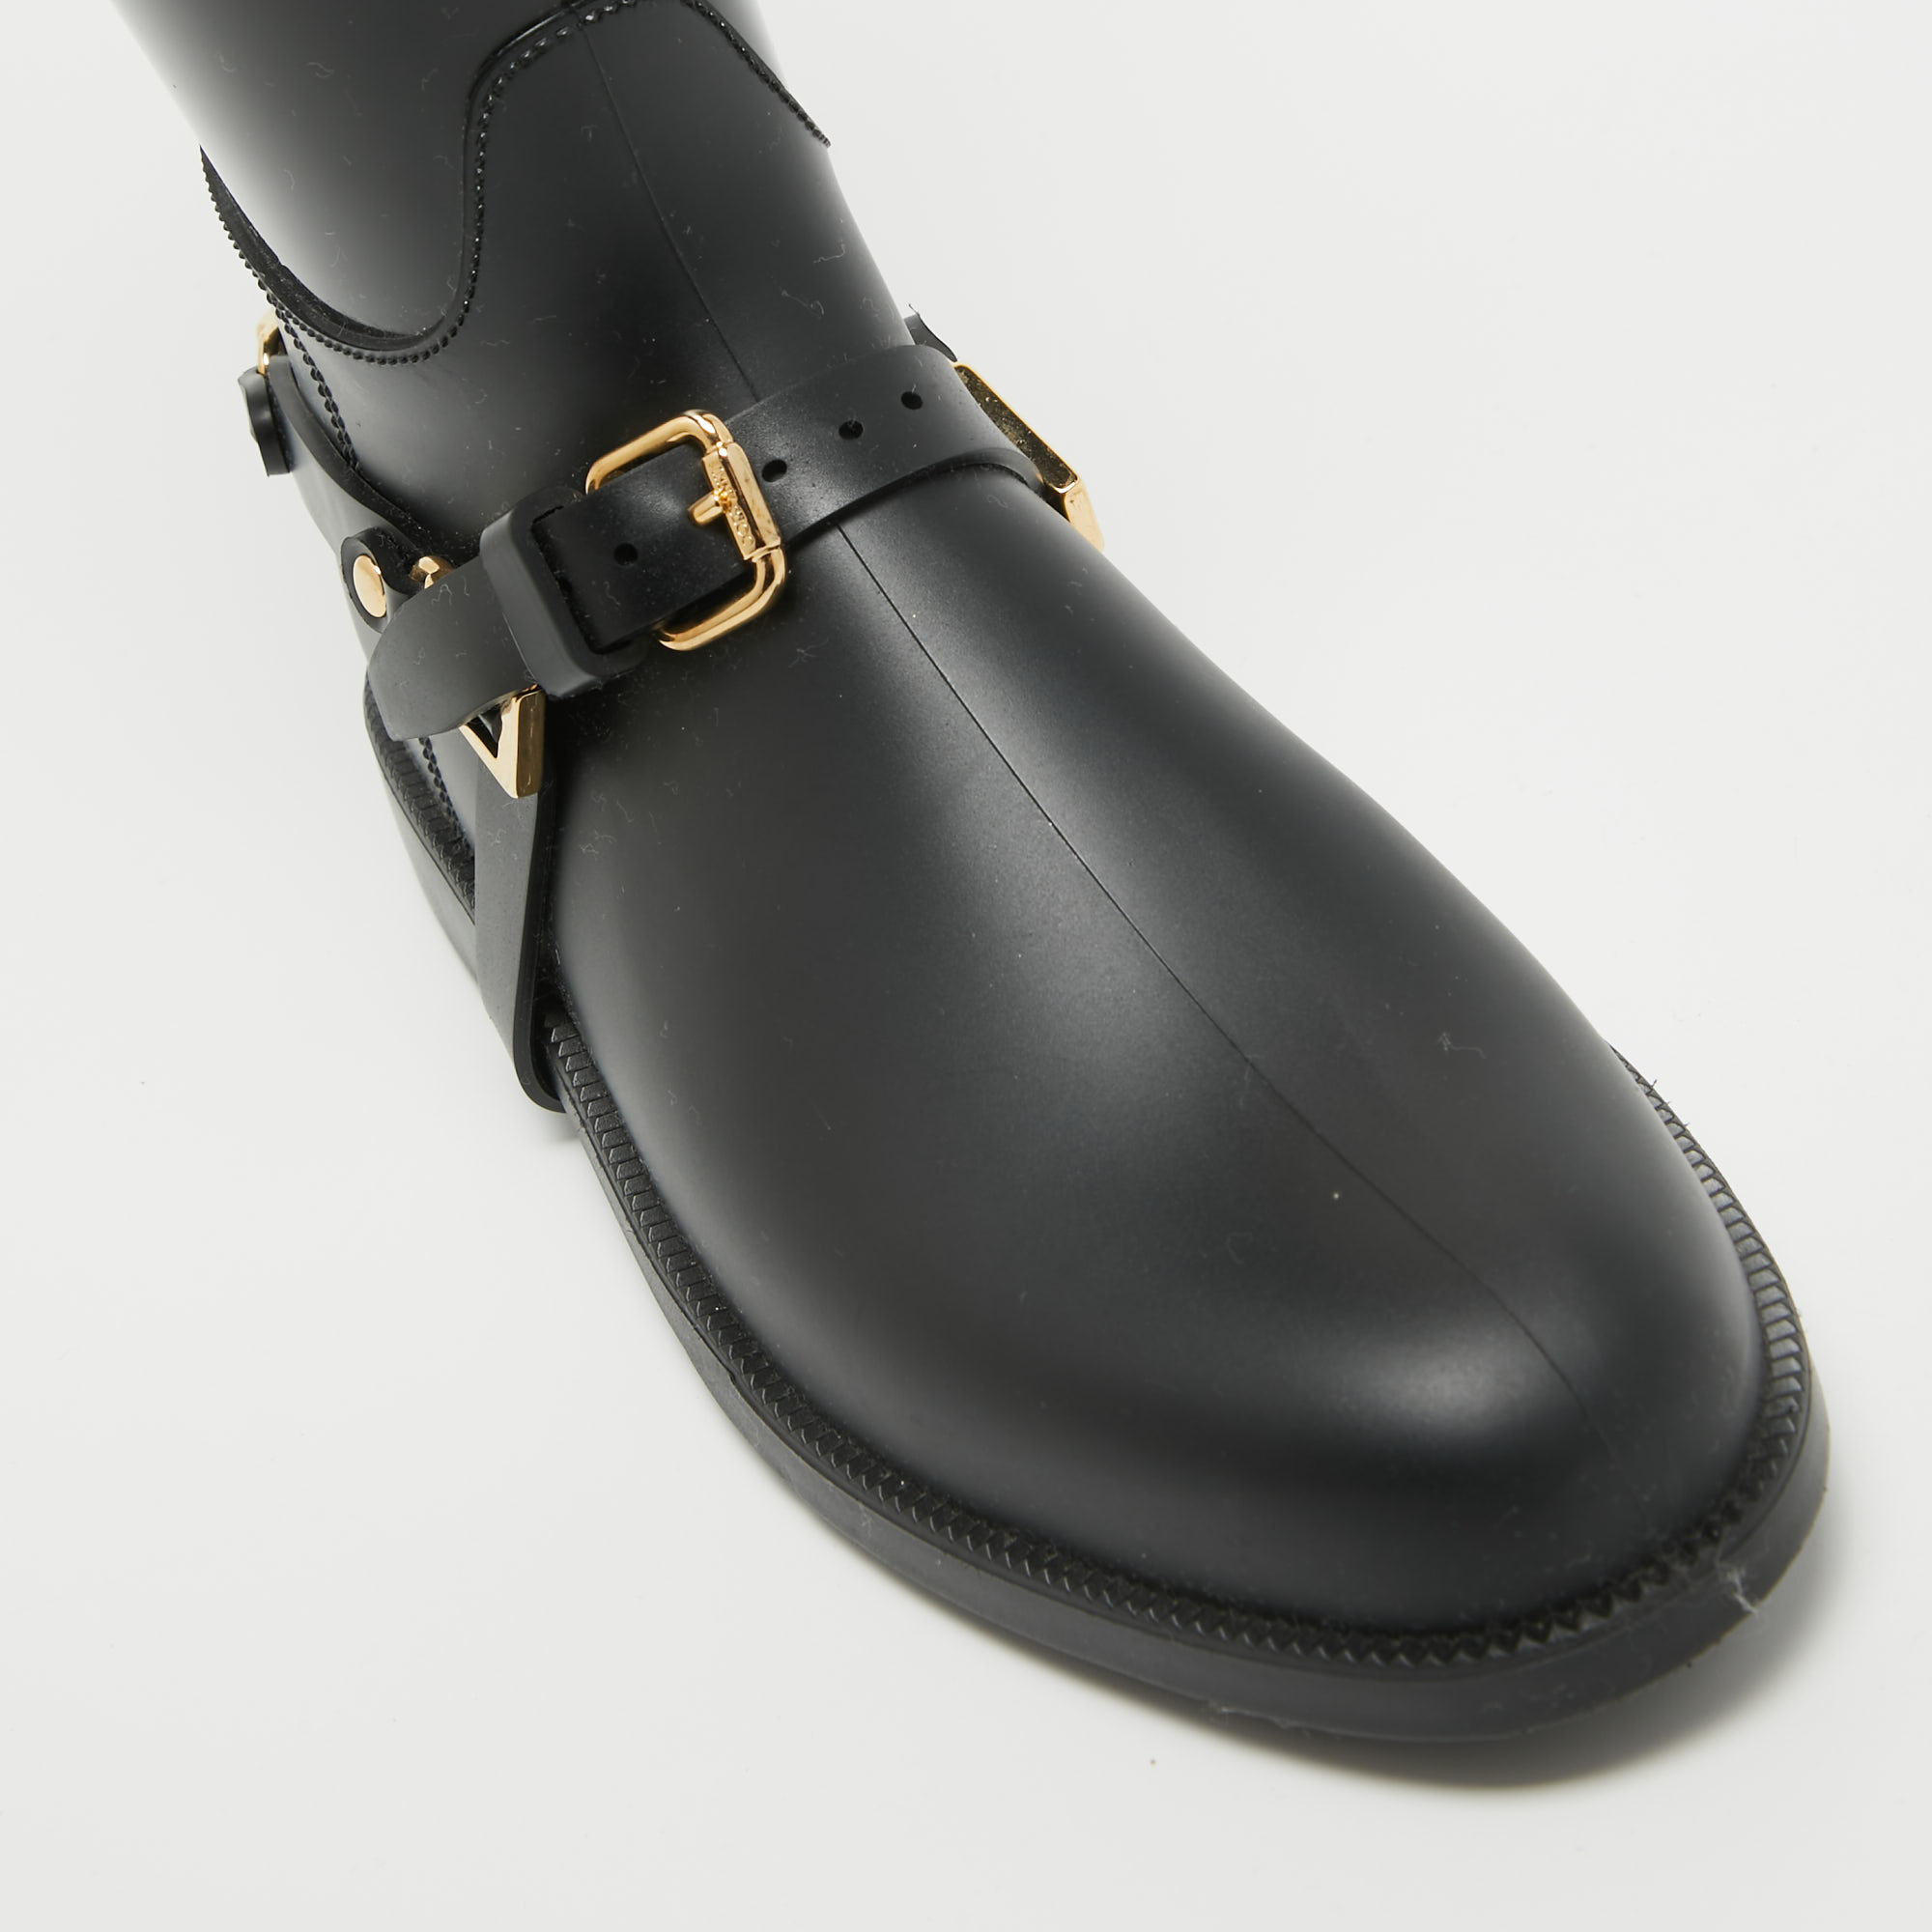 Jimmy Choo Black Rubber Rain Boots Size 36